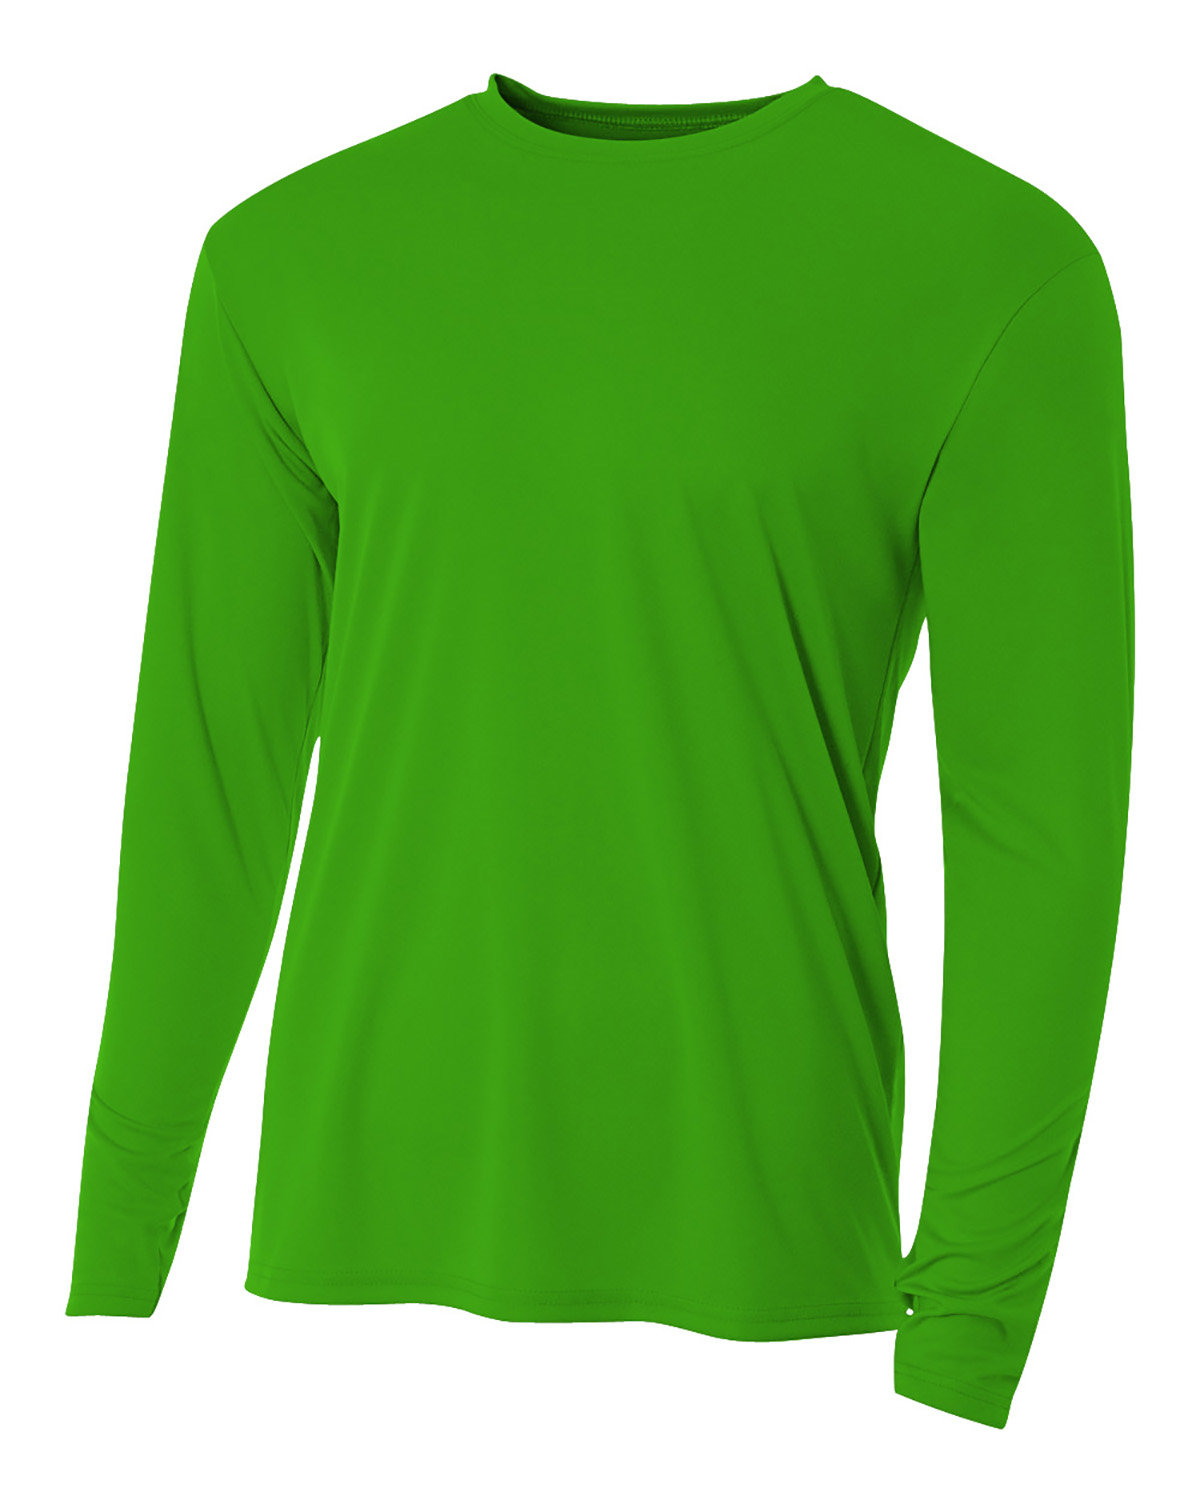 https://images.shirtspace.com/fullsize/4YlYQxdDxga1MZNmgzCX%2BA%3D%3D/413110/2939-a4-n3165-men-s-cooling-performance-long-sleeve-t-shirt-front-kelly.jpg